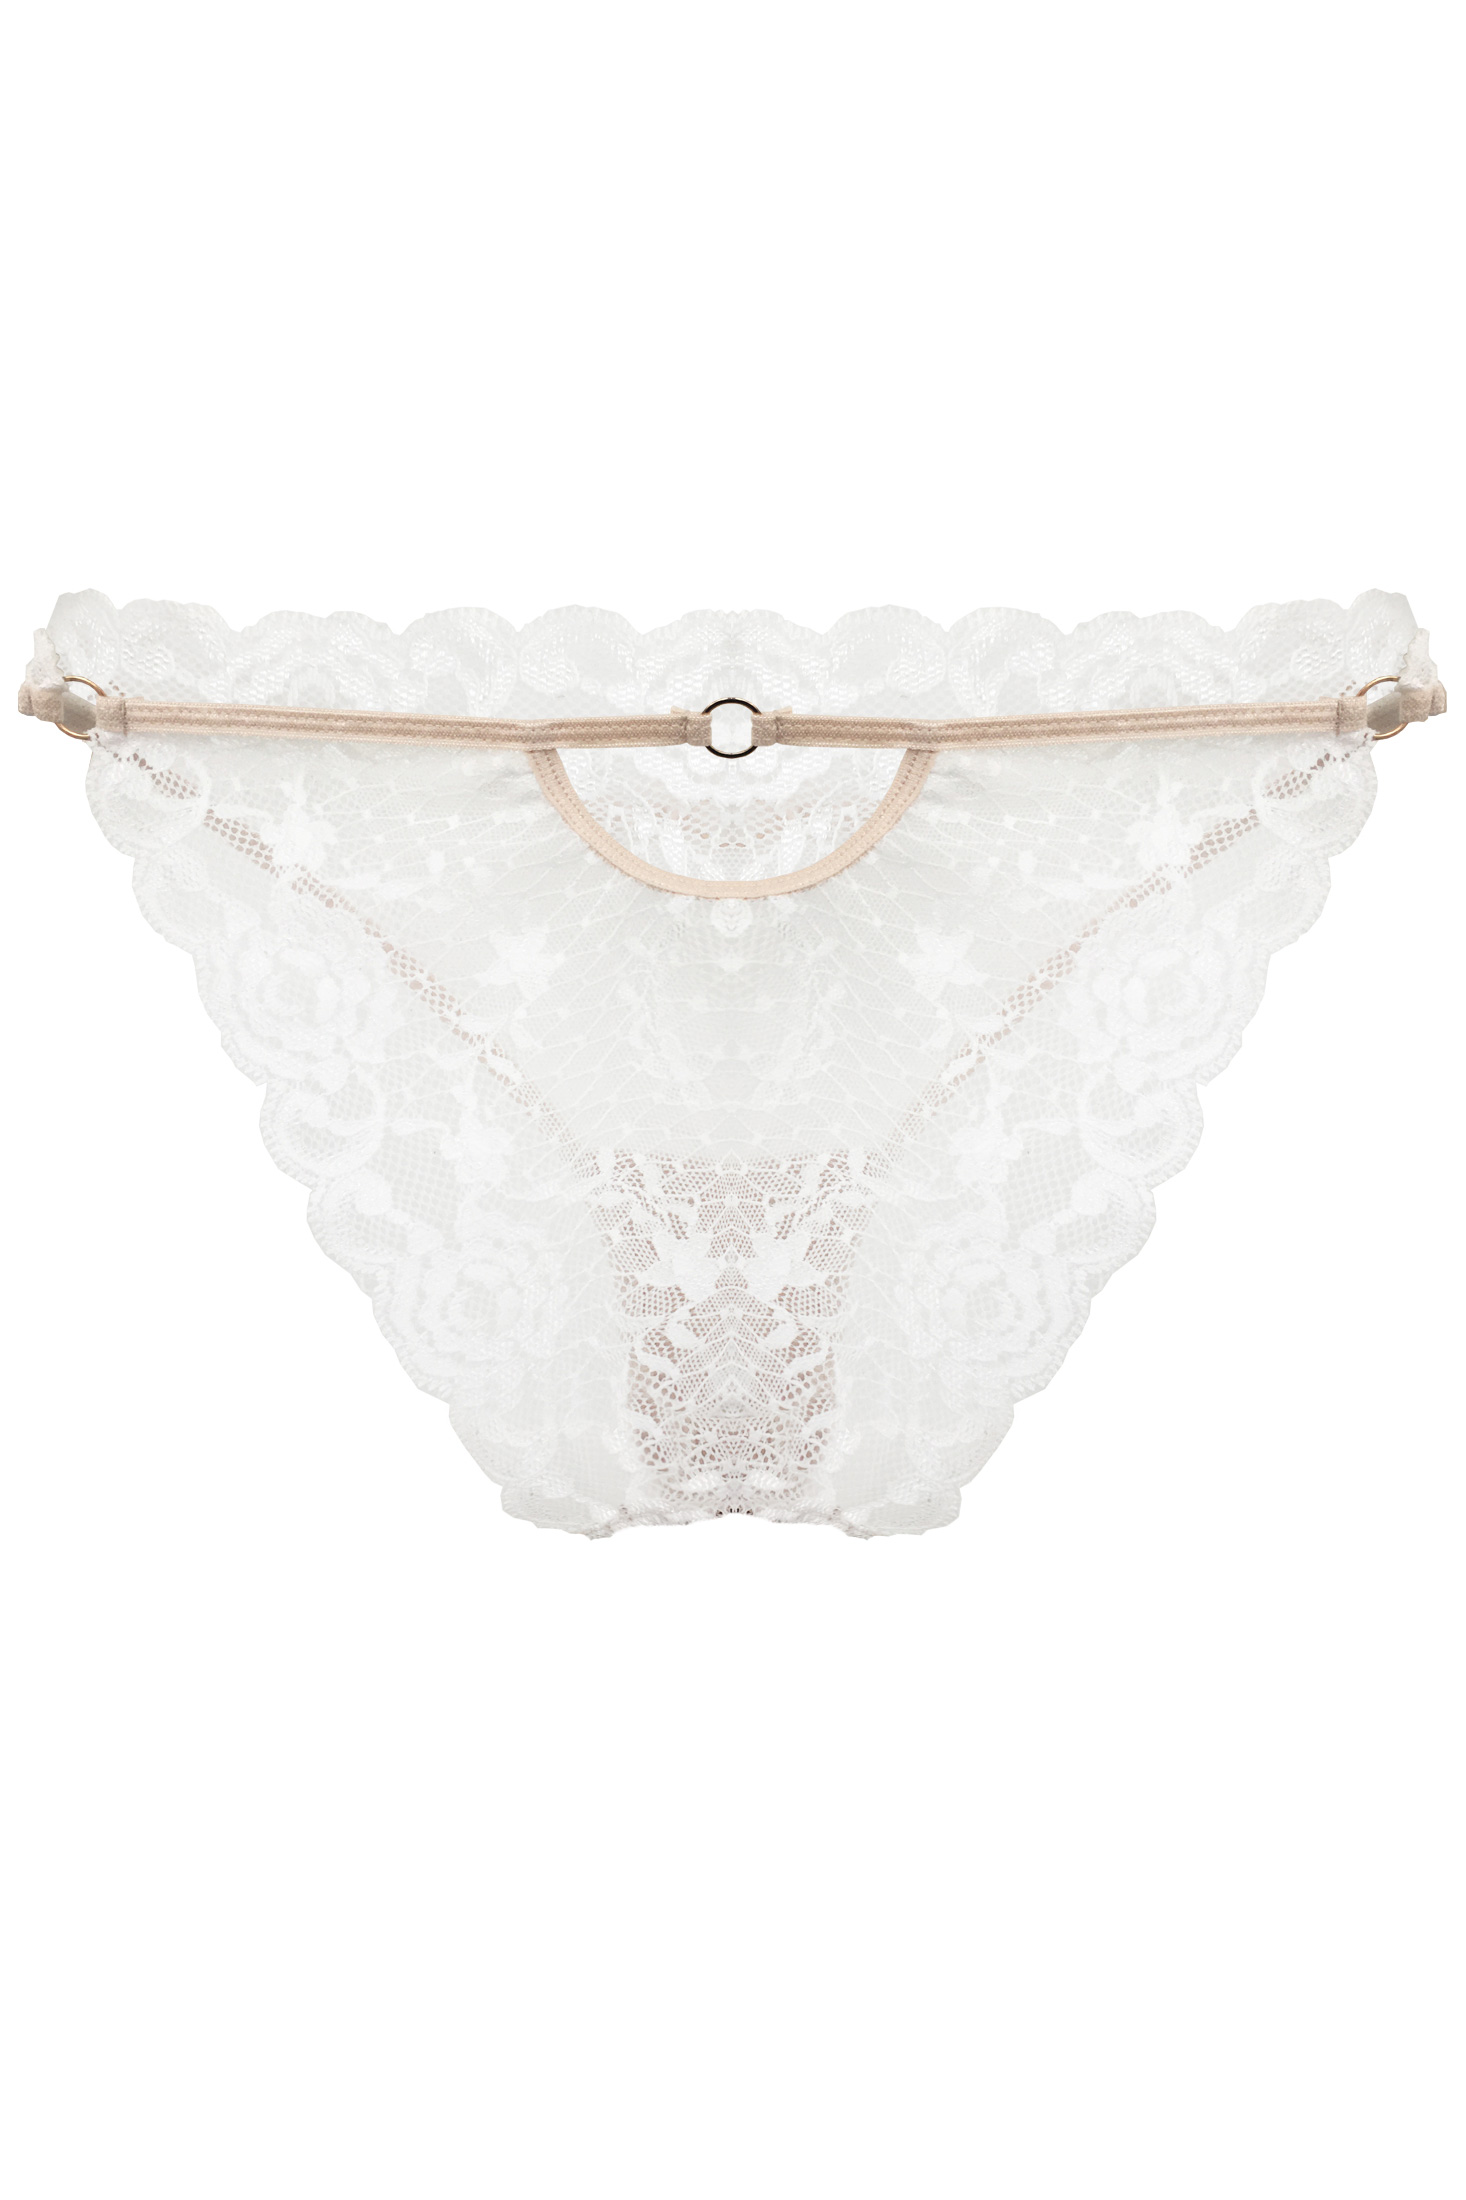 Lingerie Letters Cappuccino Brief - Women's Underwear Online